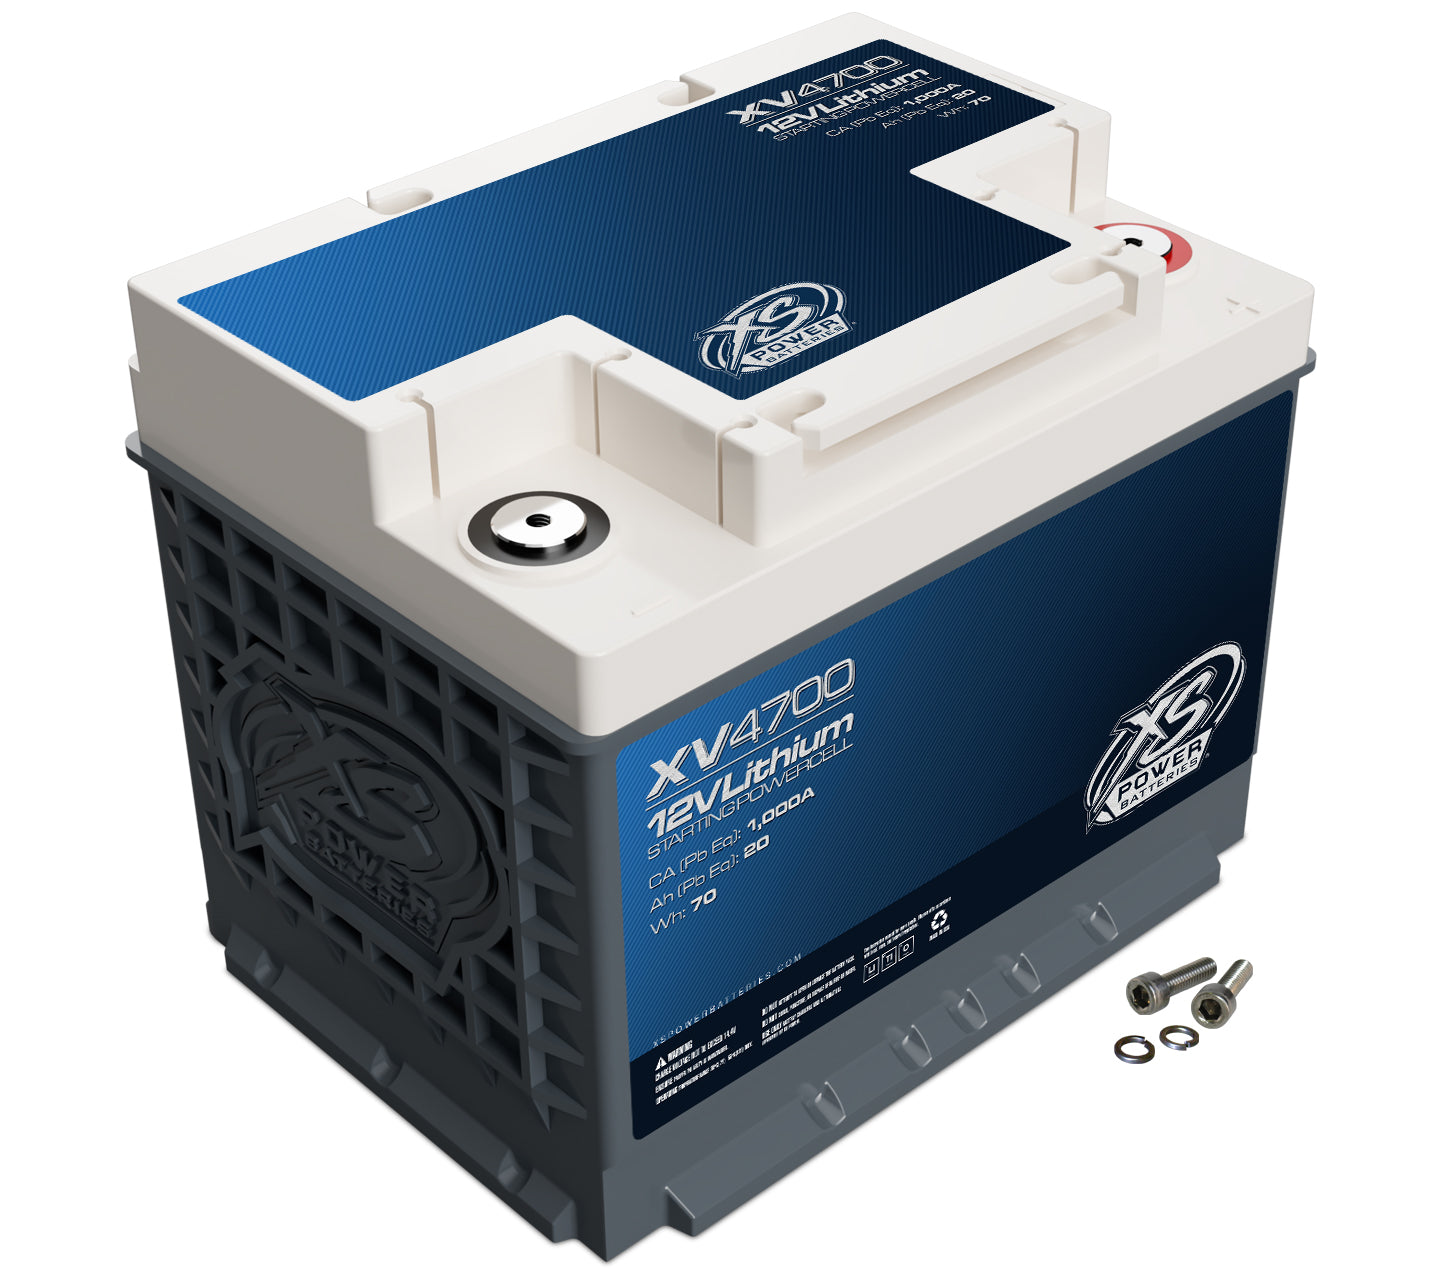 XV4700 XS Power 12VDC Group 47 Lithium LTO Underhood-Safe Vehicle Battery 1500W 70Wh